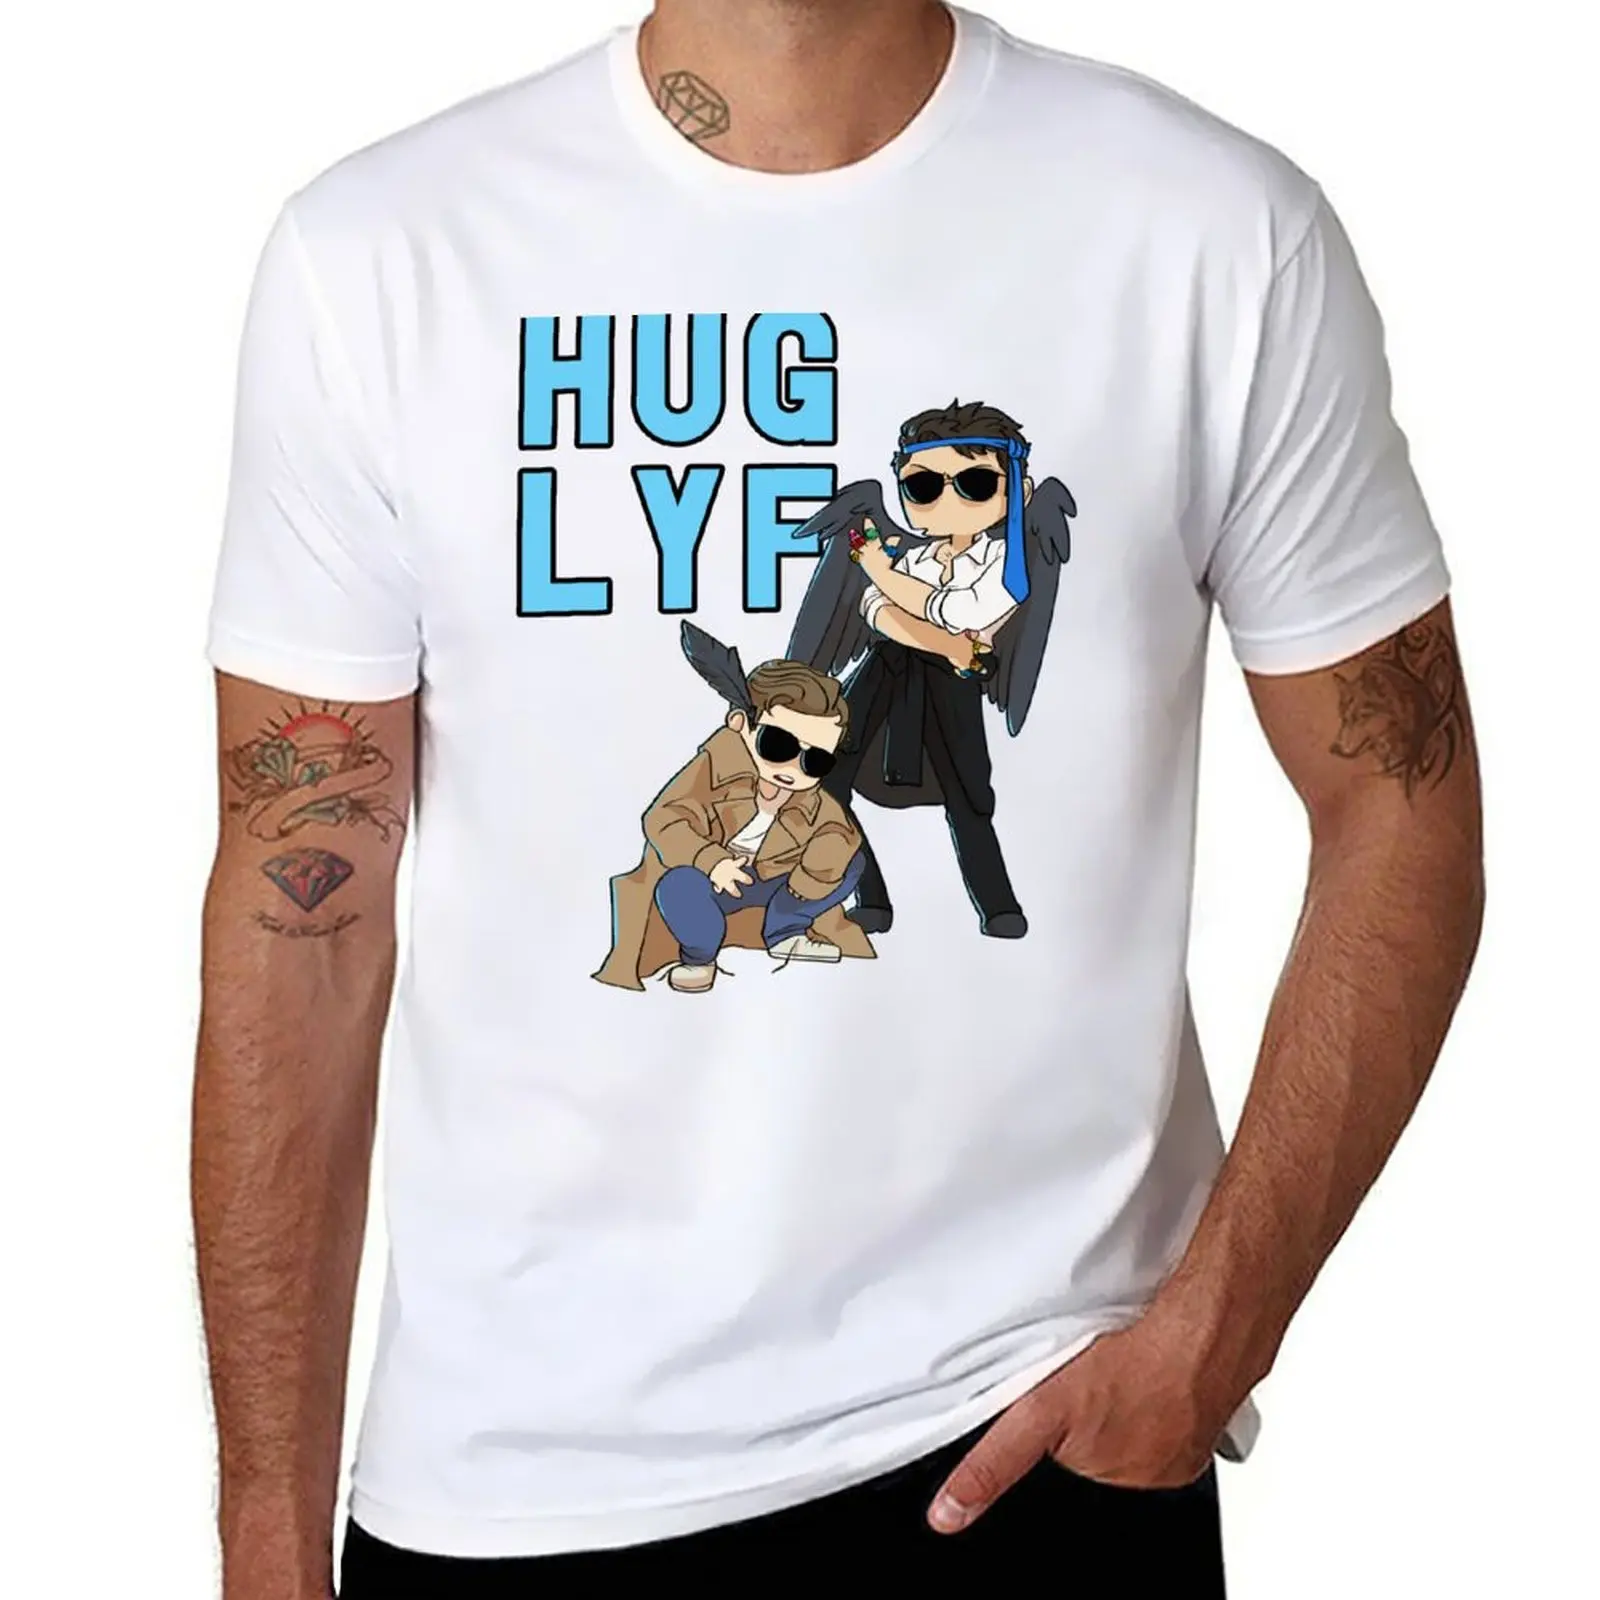 New HUG LYF T-Shirt plus size tops sublime t shirt korean fashion boys white t shirts mens funny t shirts